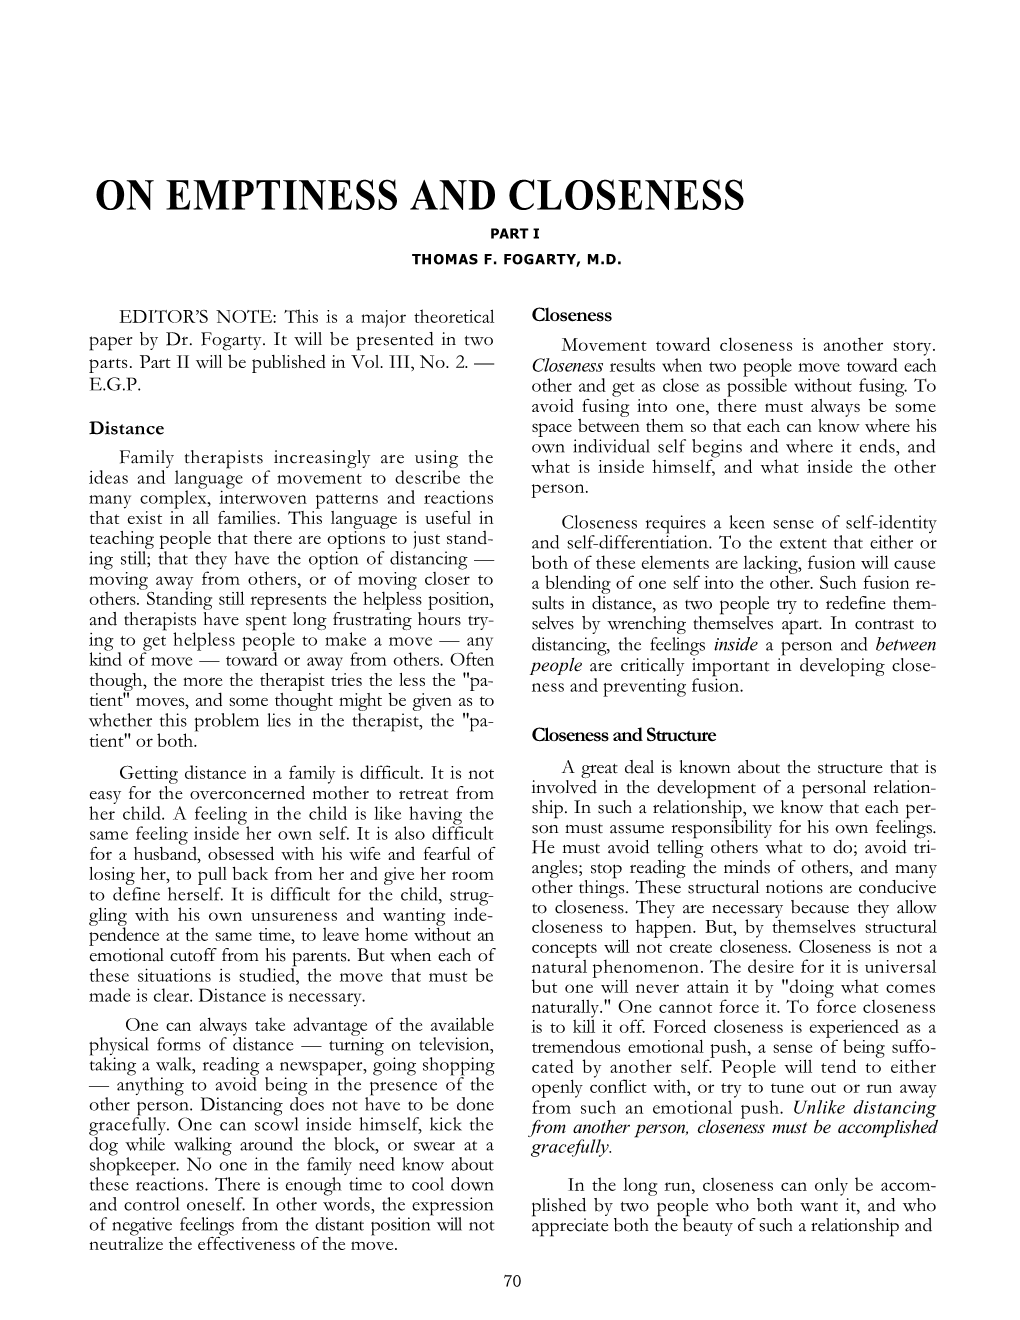 On Emptiness and Closeness Part I Thomas F